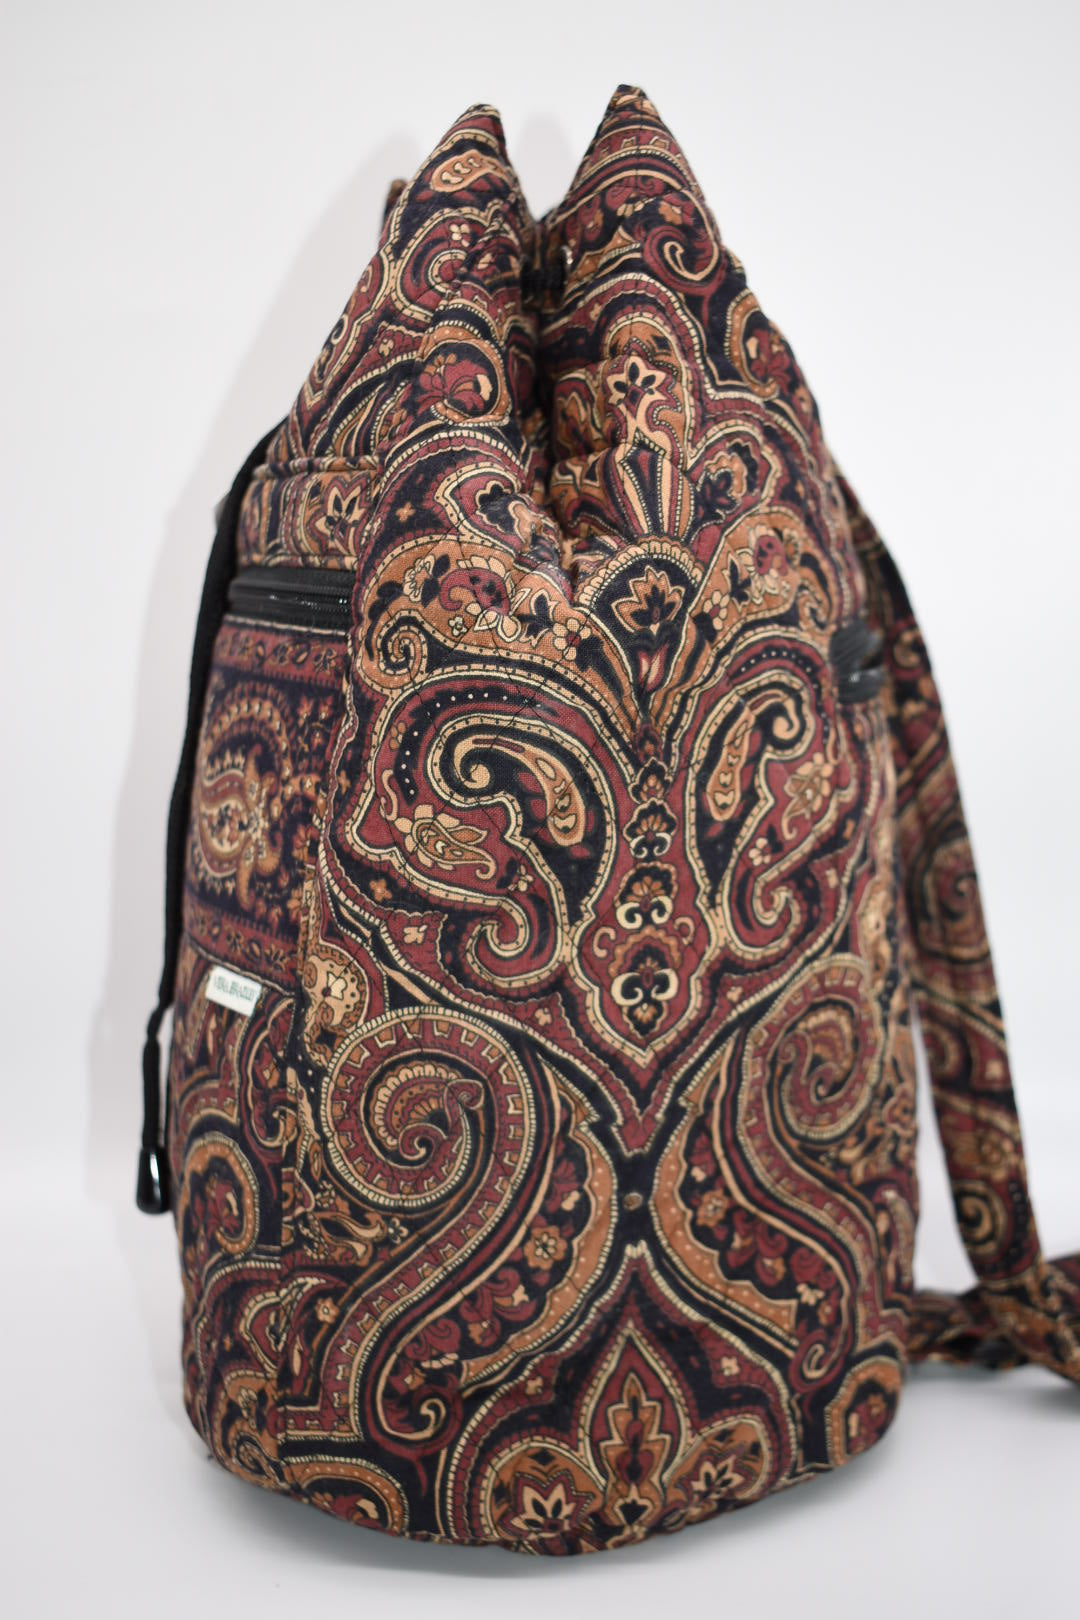 Vintage Vera Bradley Sling Bag in "Mocha - 1996" Pattern